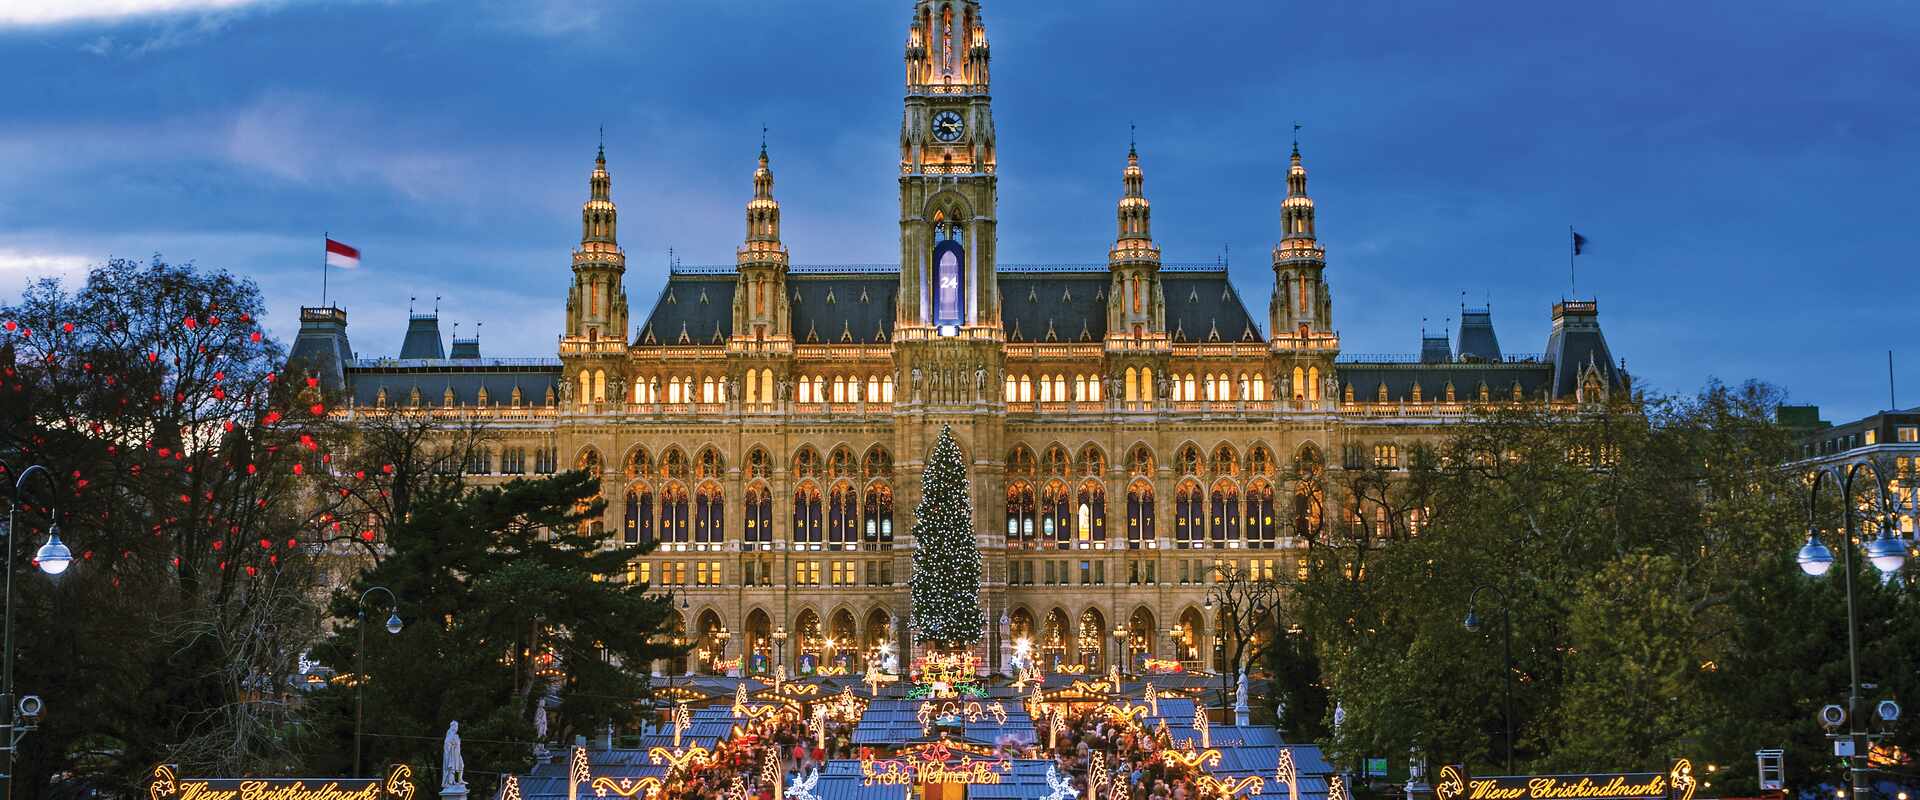 Christmas Markets Vienna, Austria